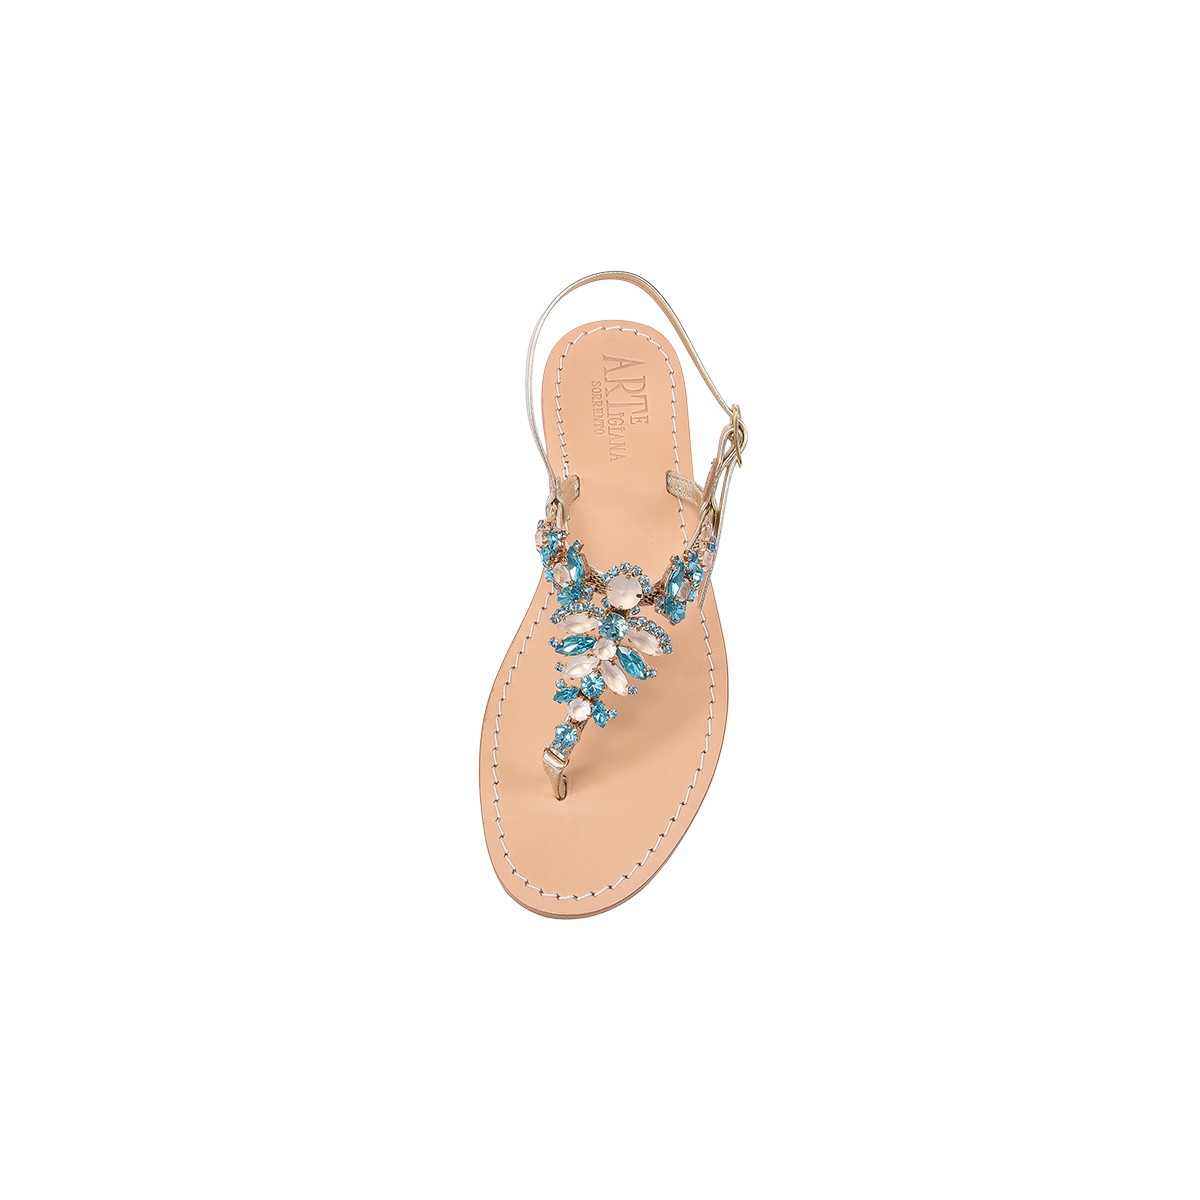 civilization Encommium Fascinate Handmade jewel sandals fashion Sorrento, Capri, Positano